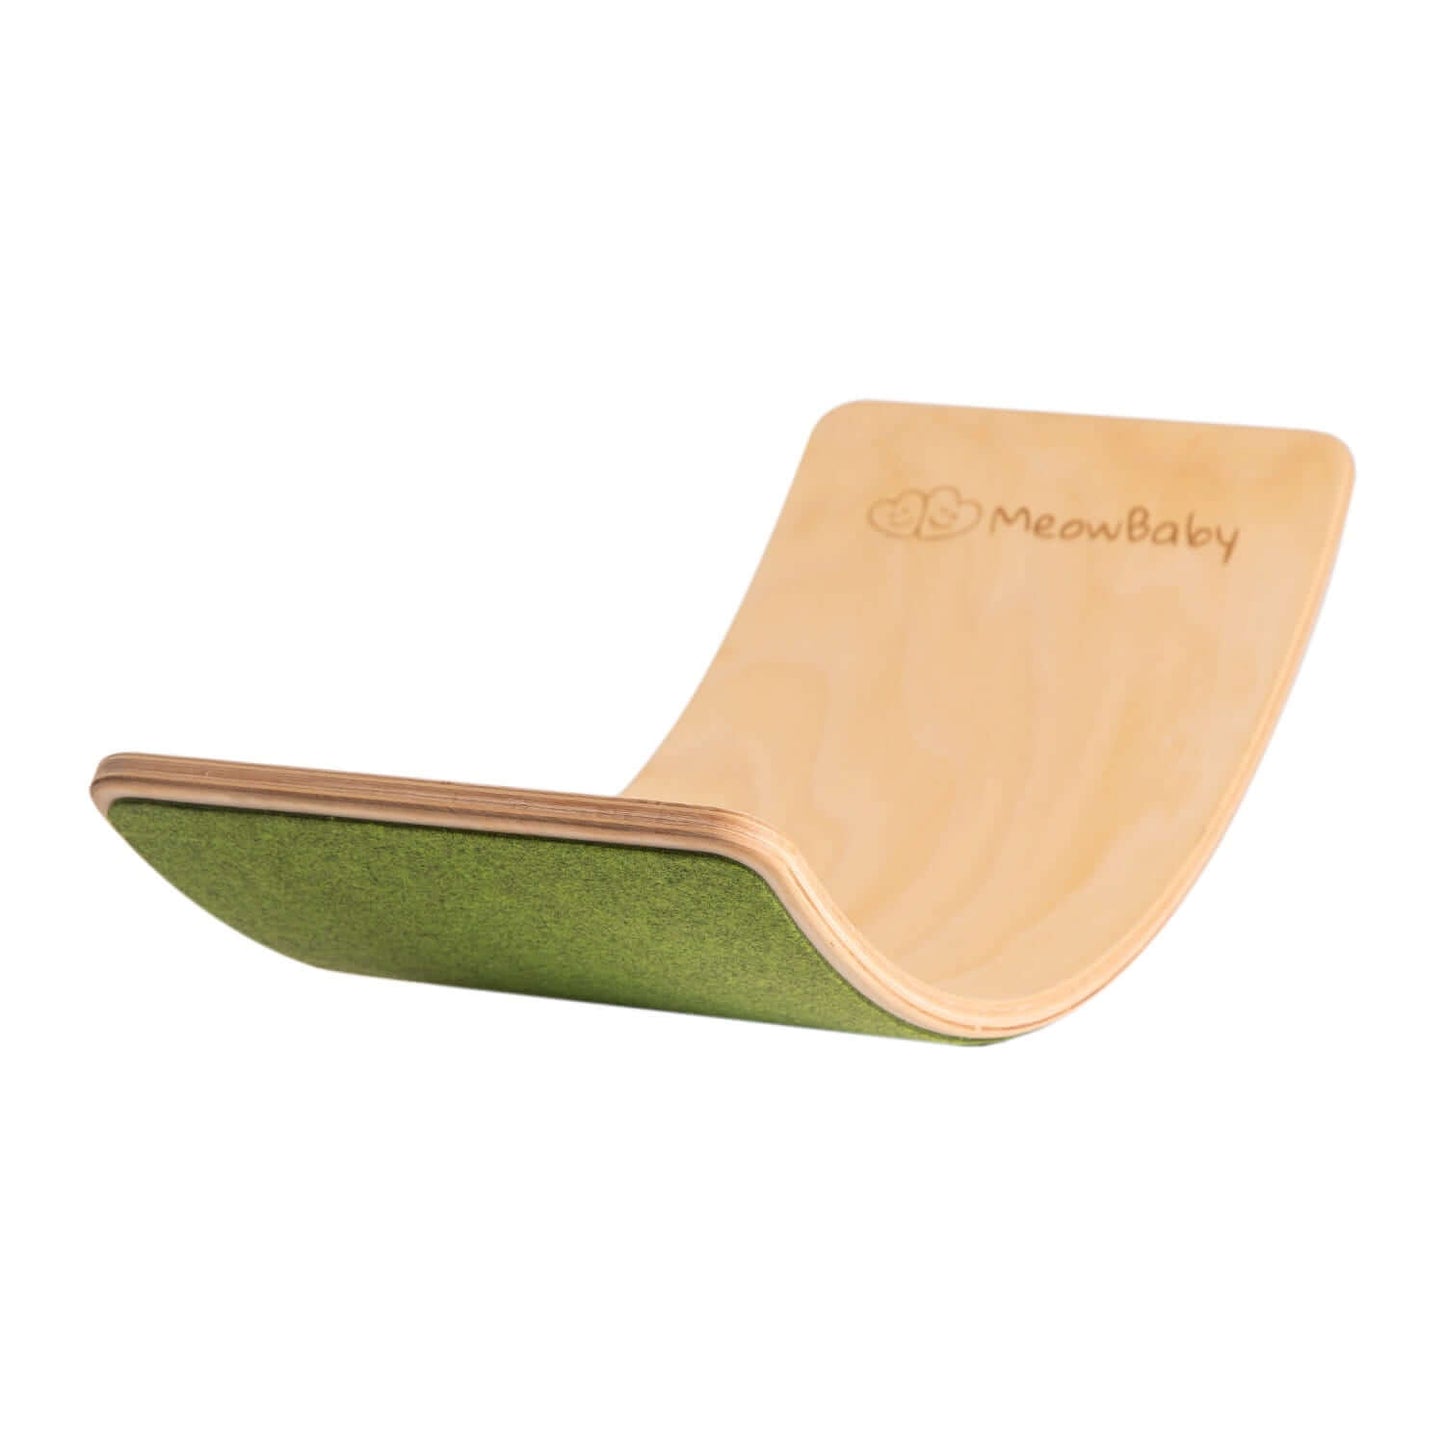 MeowBaby® Balance Board Balancierbrett aus Holz mit Filz